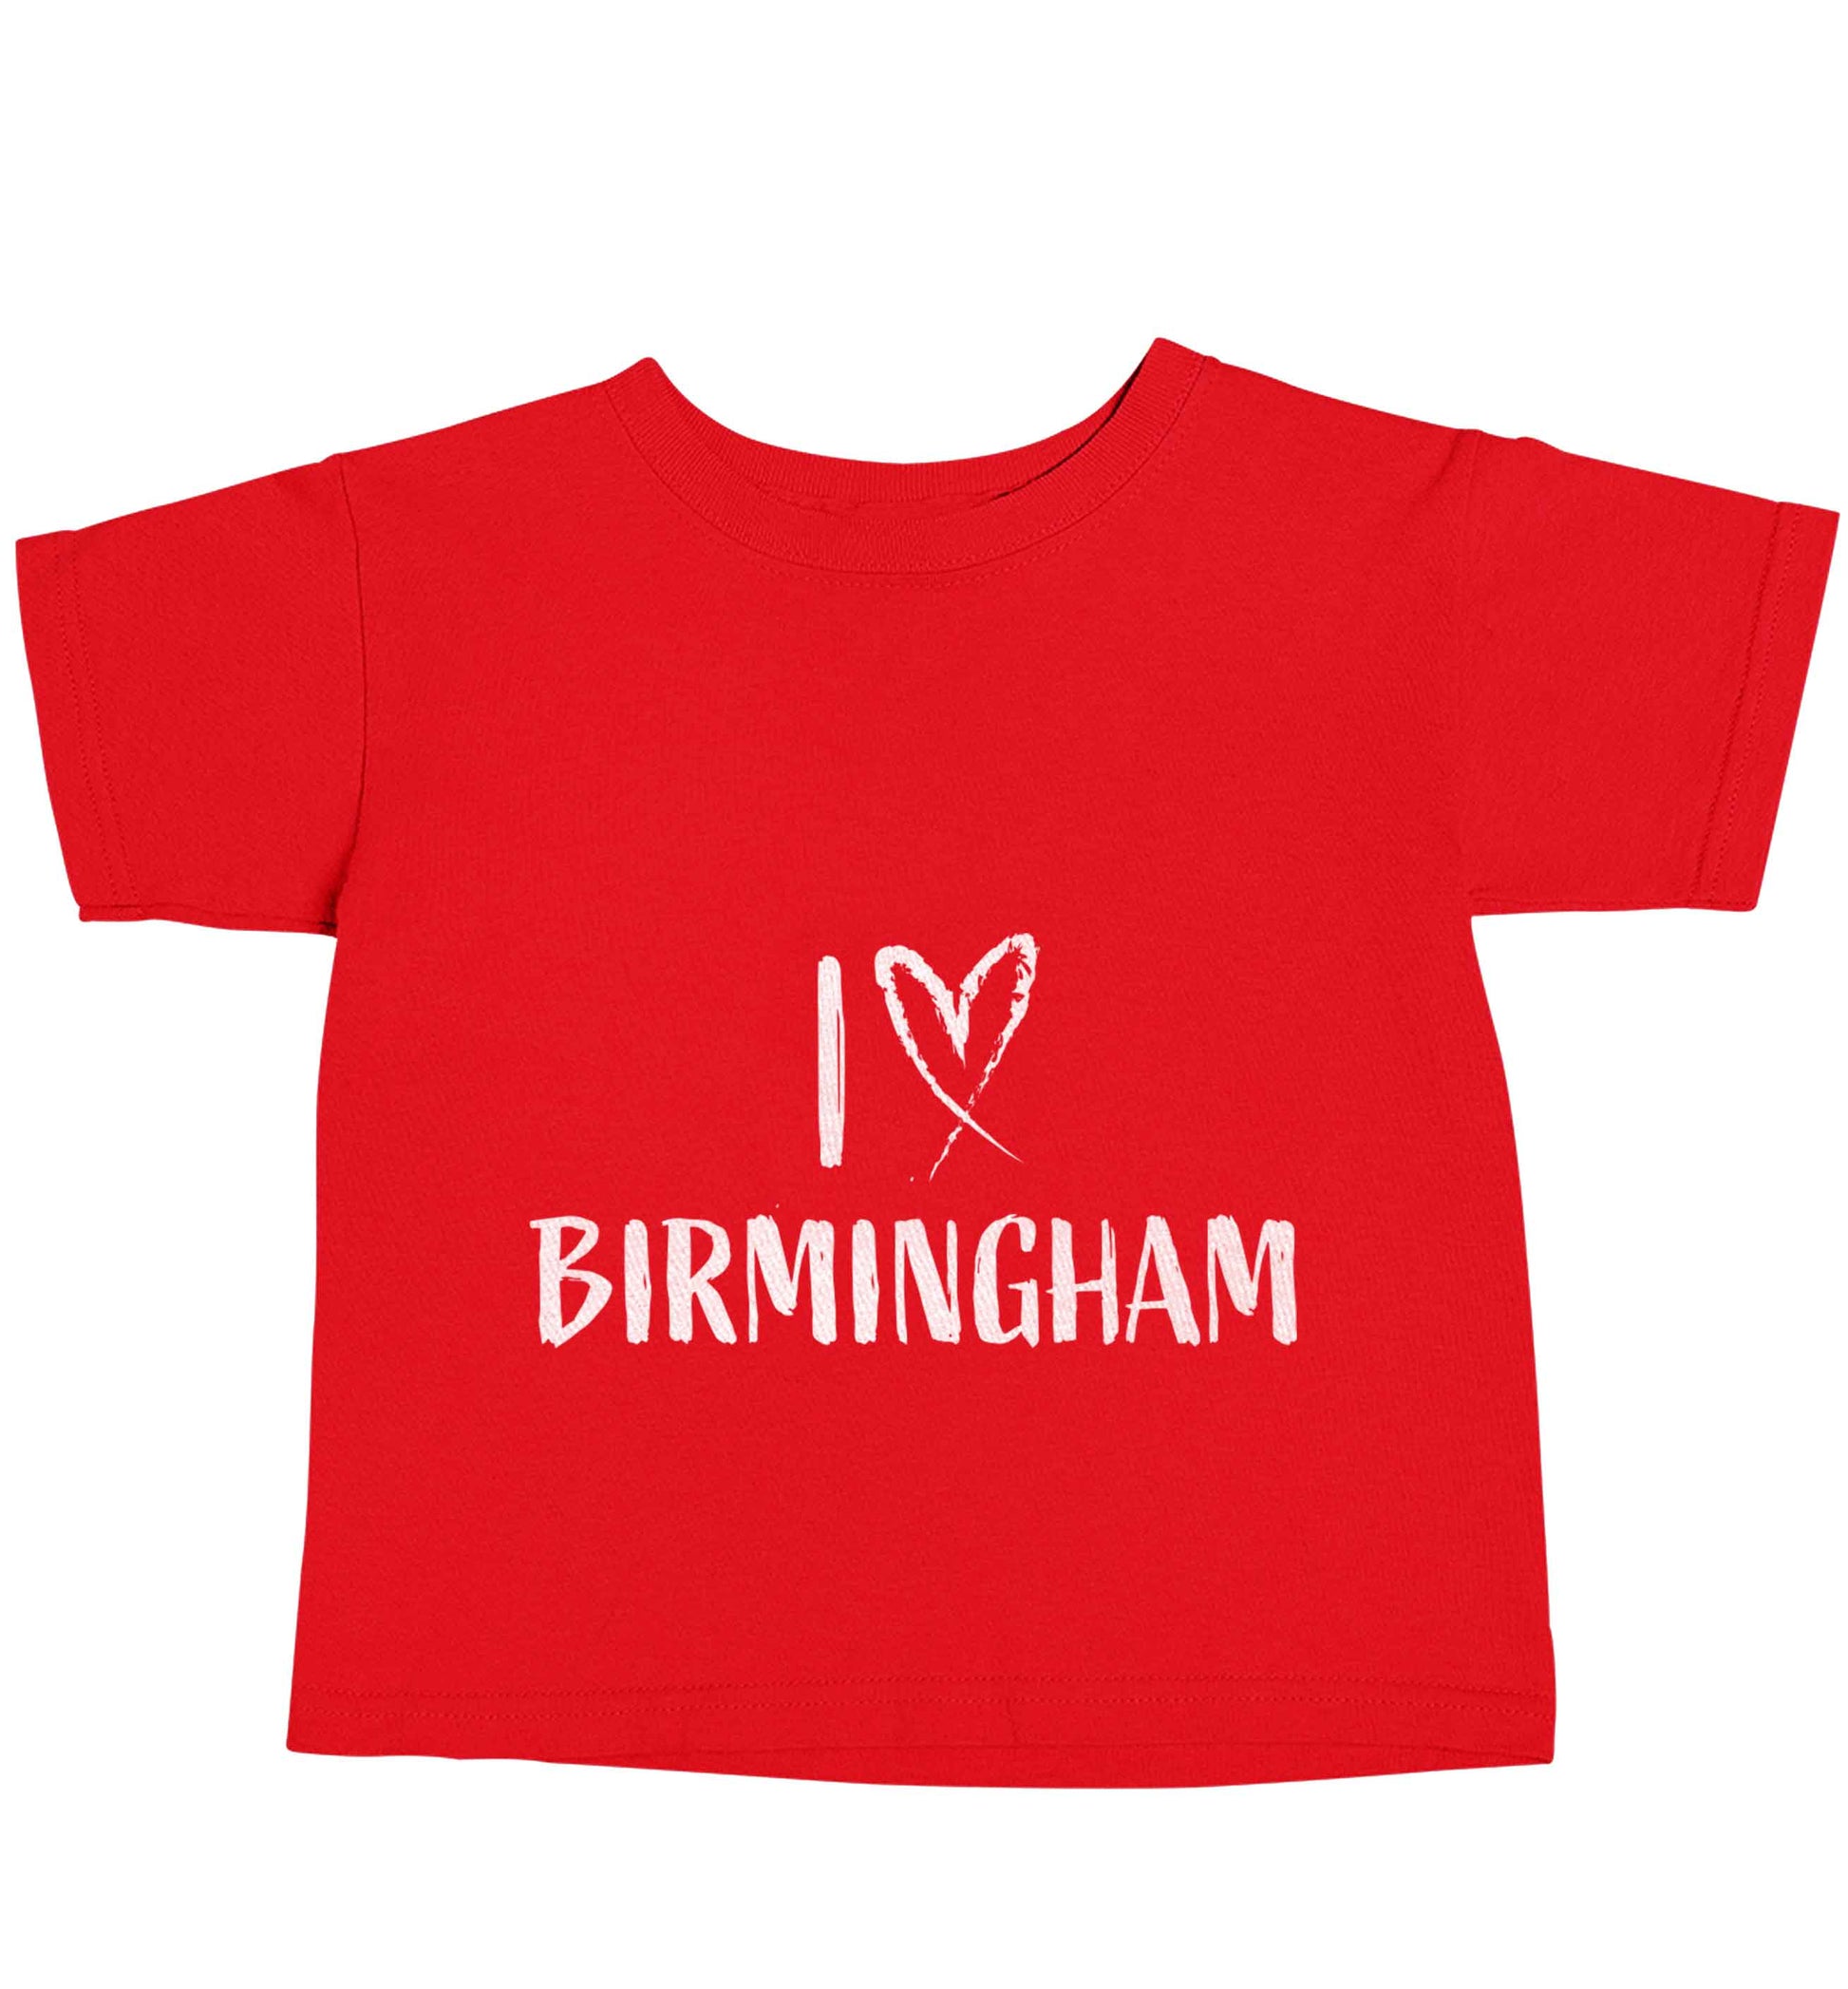 I love Birmingham red baby toddler Tshirt 2 Years